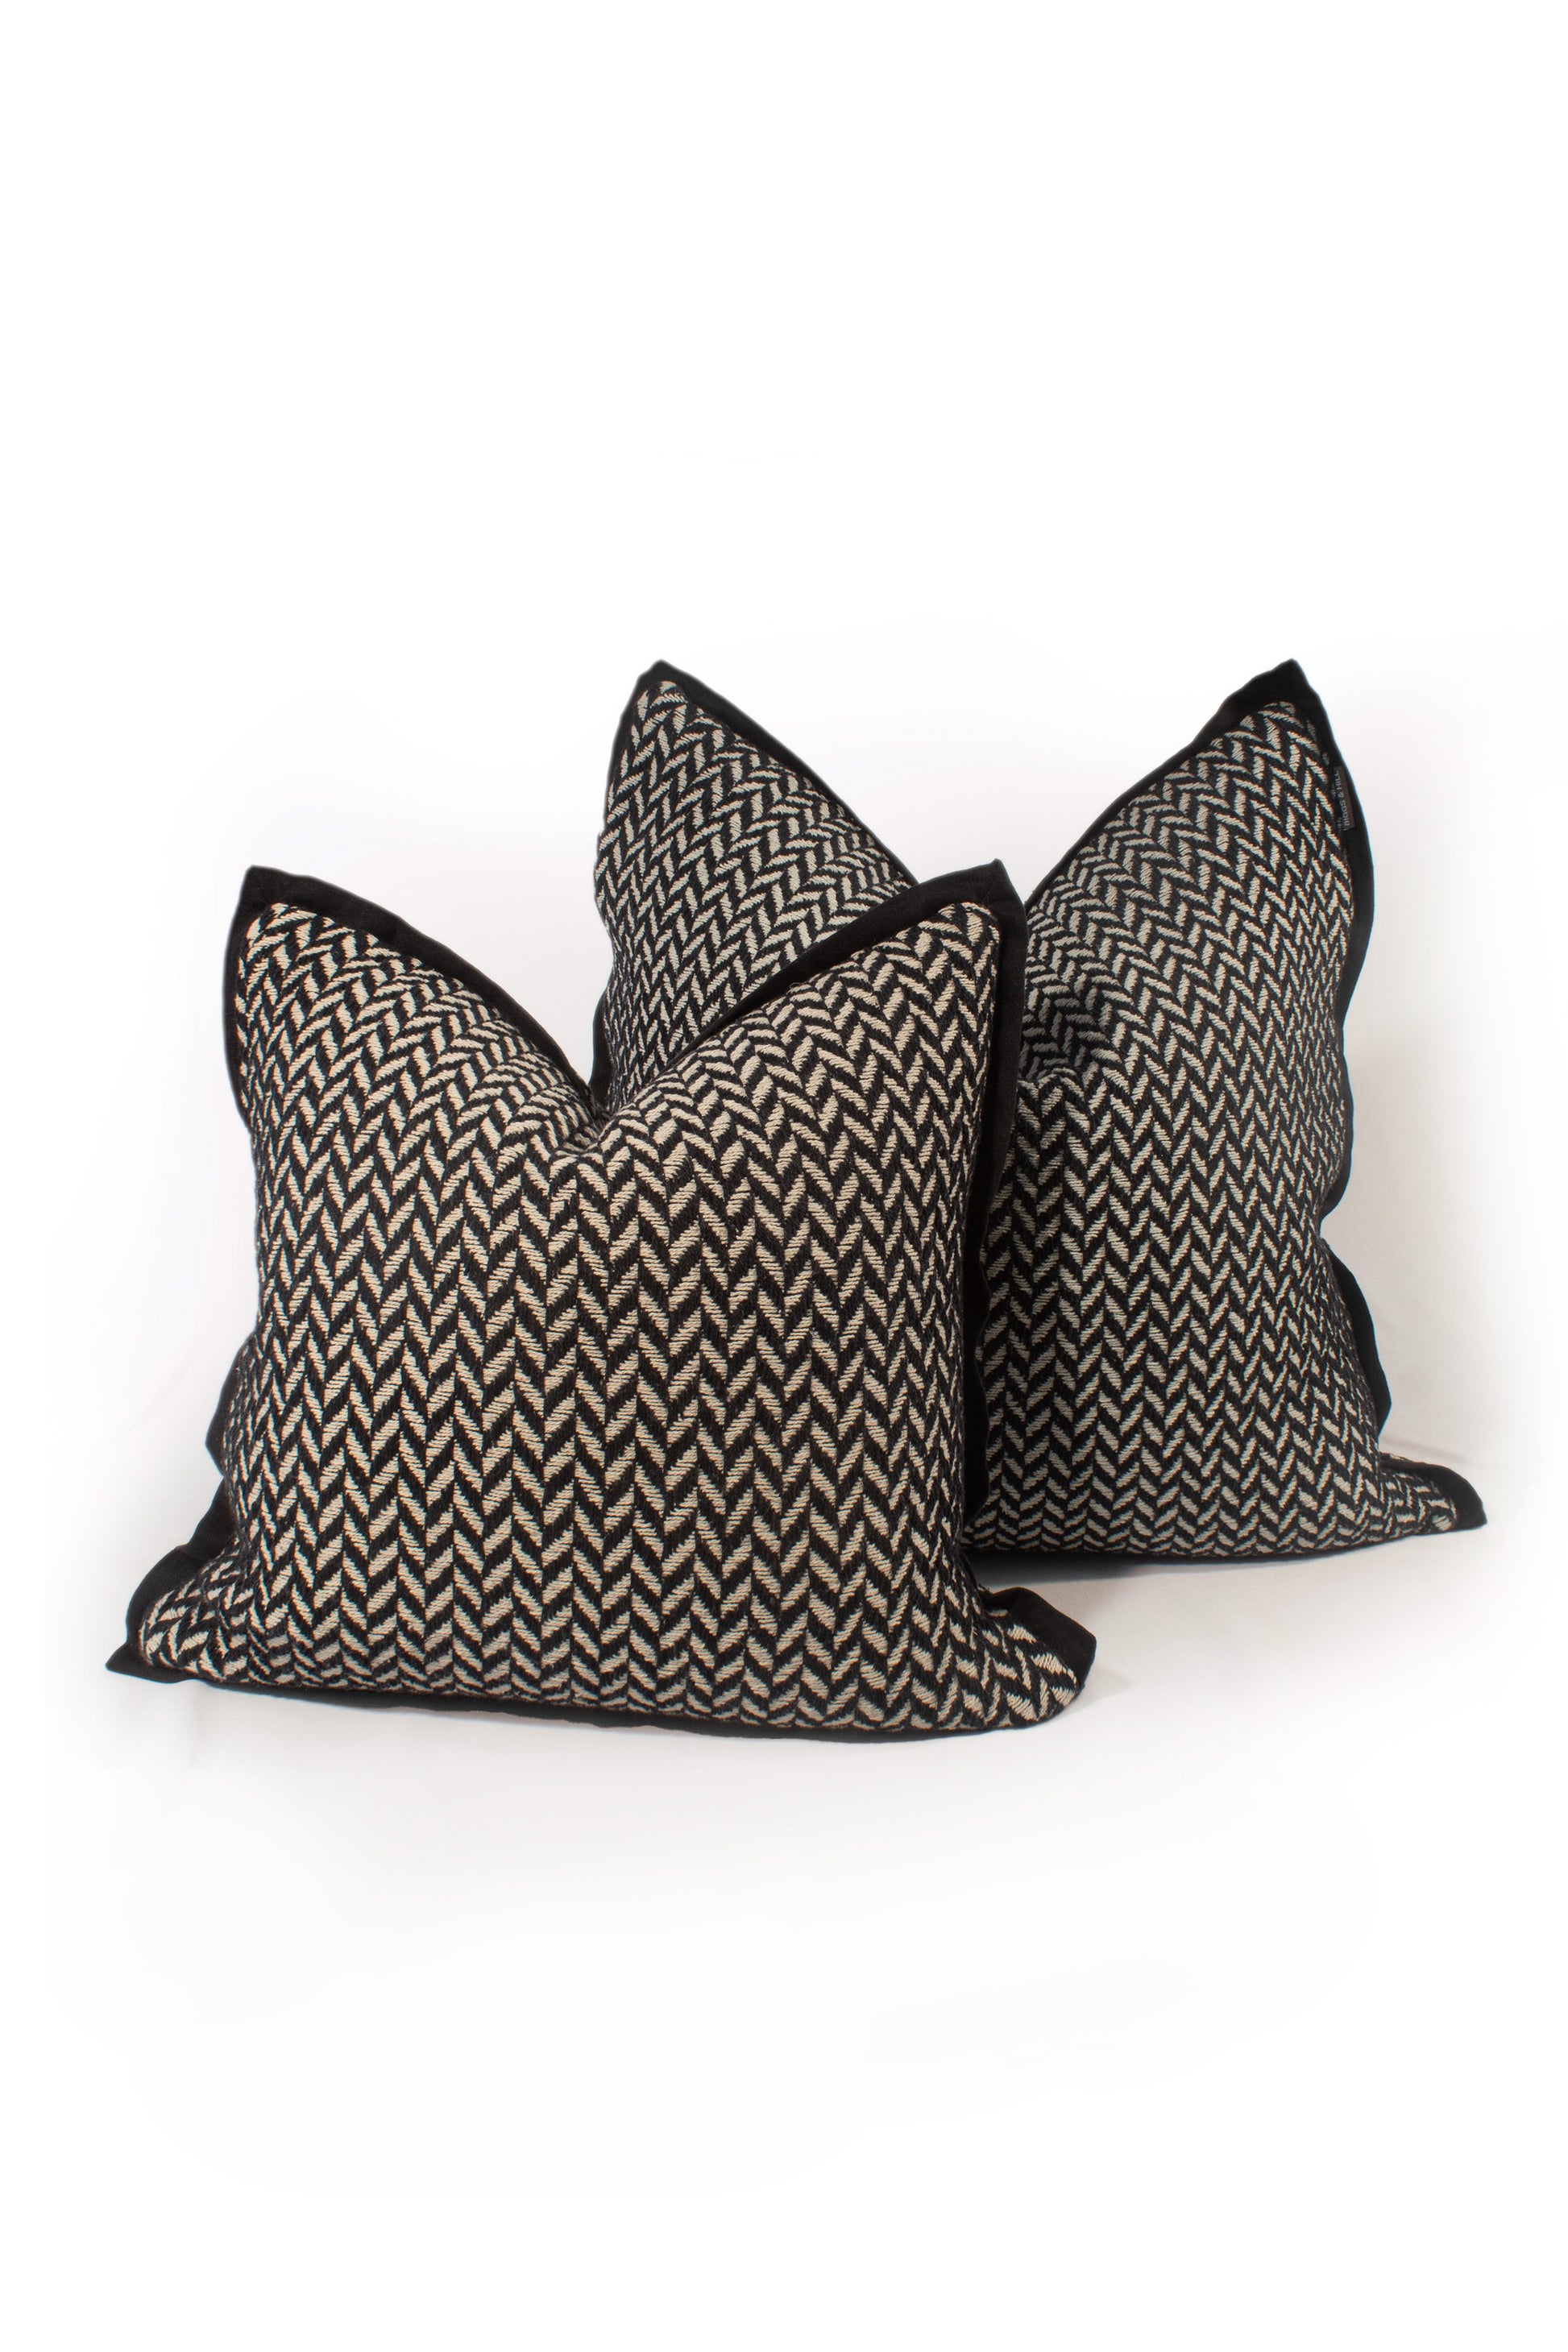 Black and White Herringbone Cotton Cushion Cover - Biggs & Hill - Cushion Covers - 45cm - 60cm - large cushion - handmade